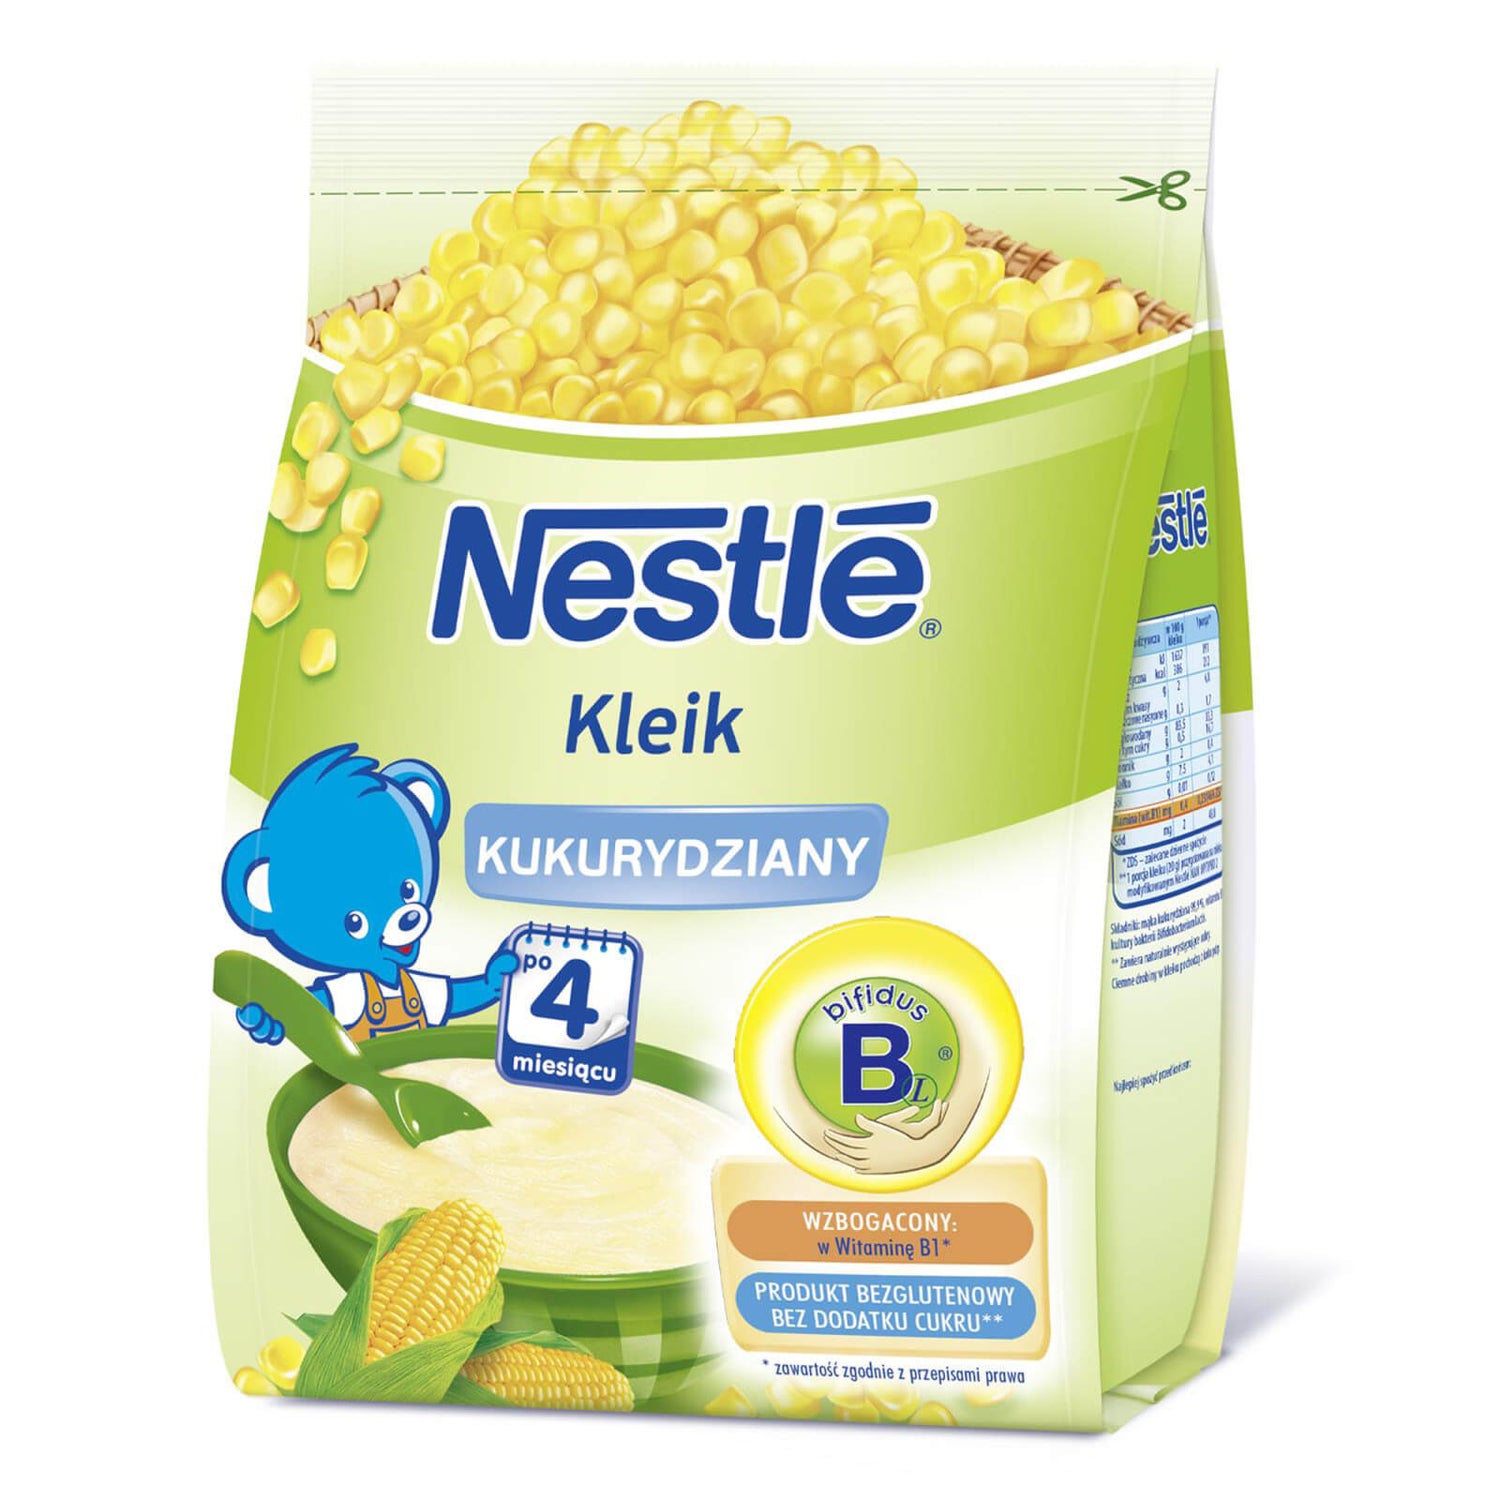 Nestlé Kleik kukurydziany - 160g